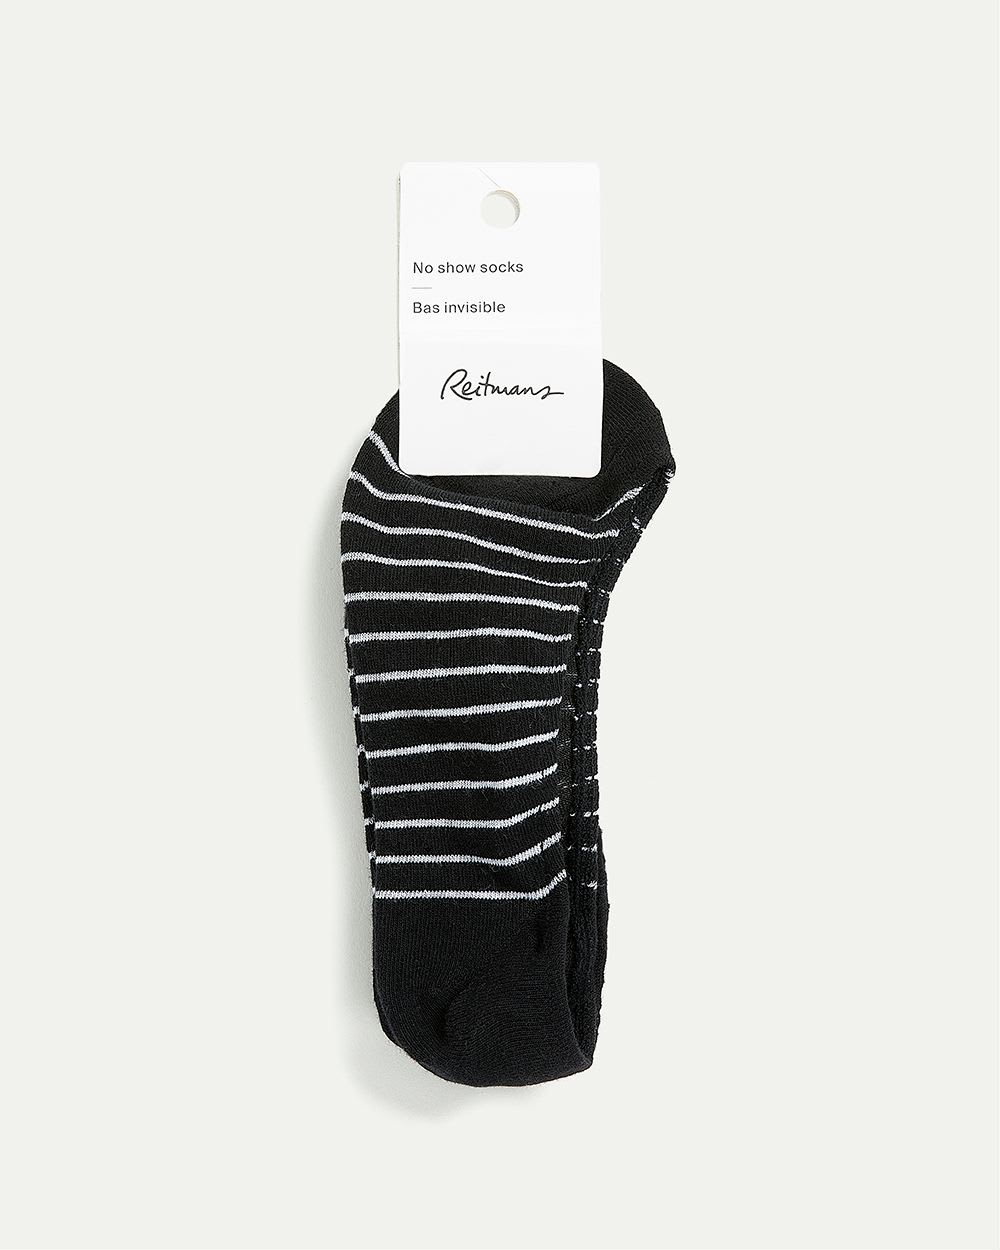 Striped Ballerina Cotton Socks